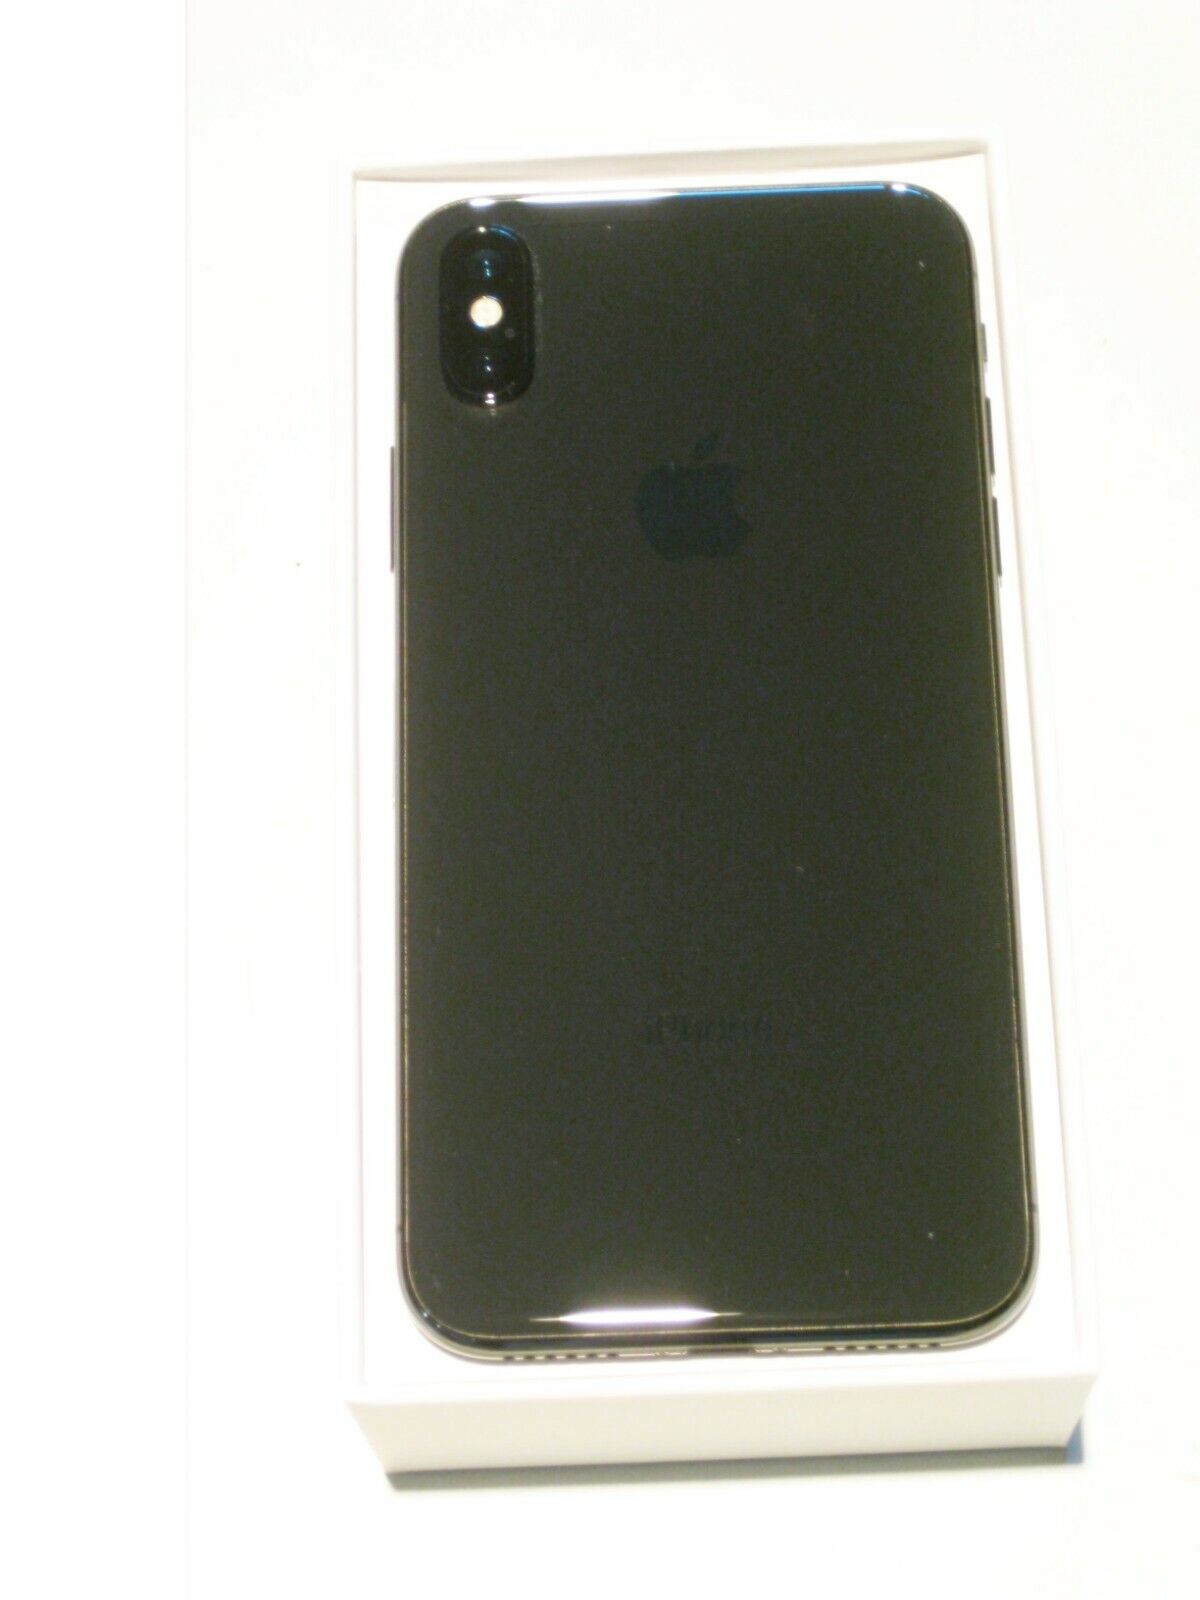 Apple iPhone X - 256GB - Space Gray (Sprint) A1865 (CDMA + GSM 